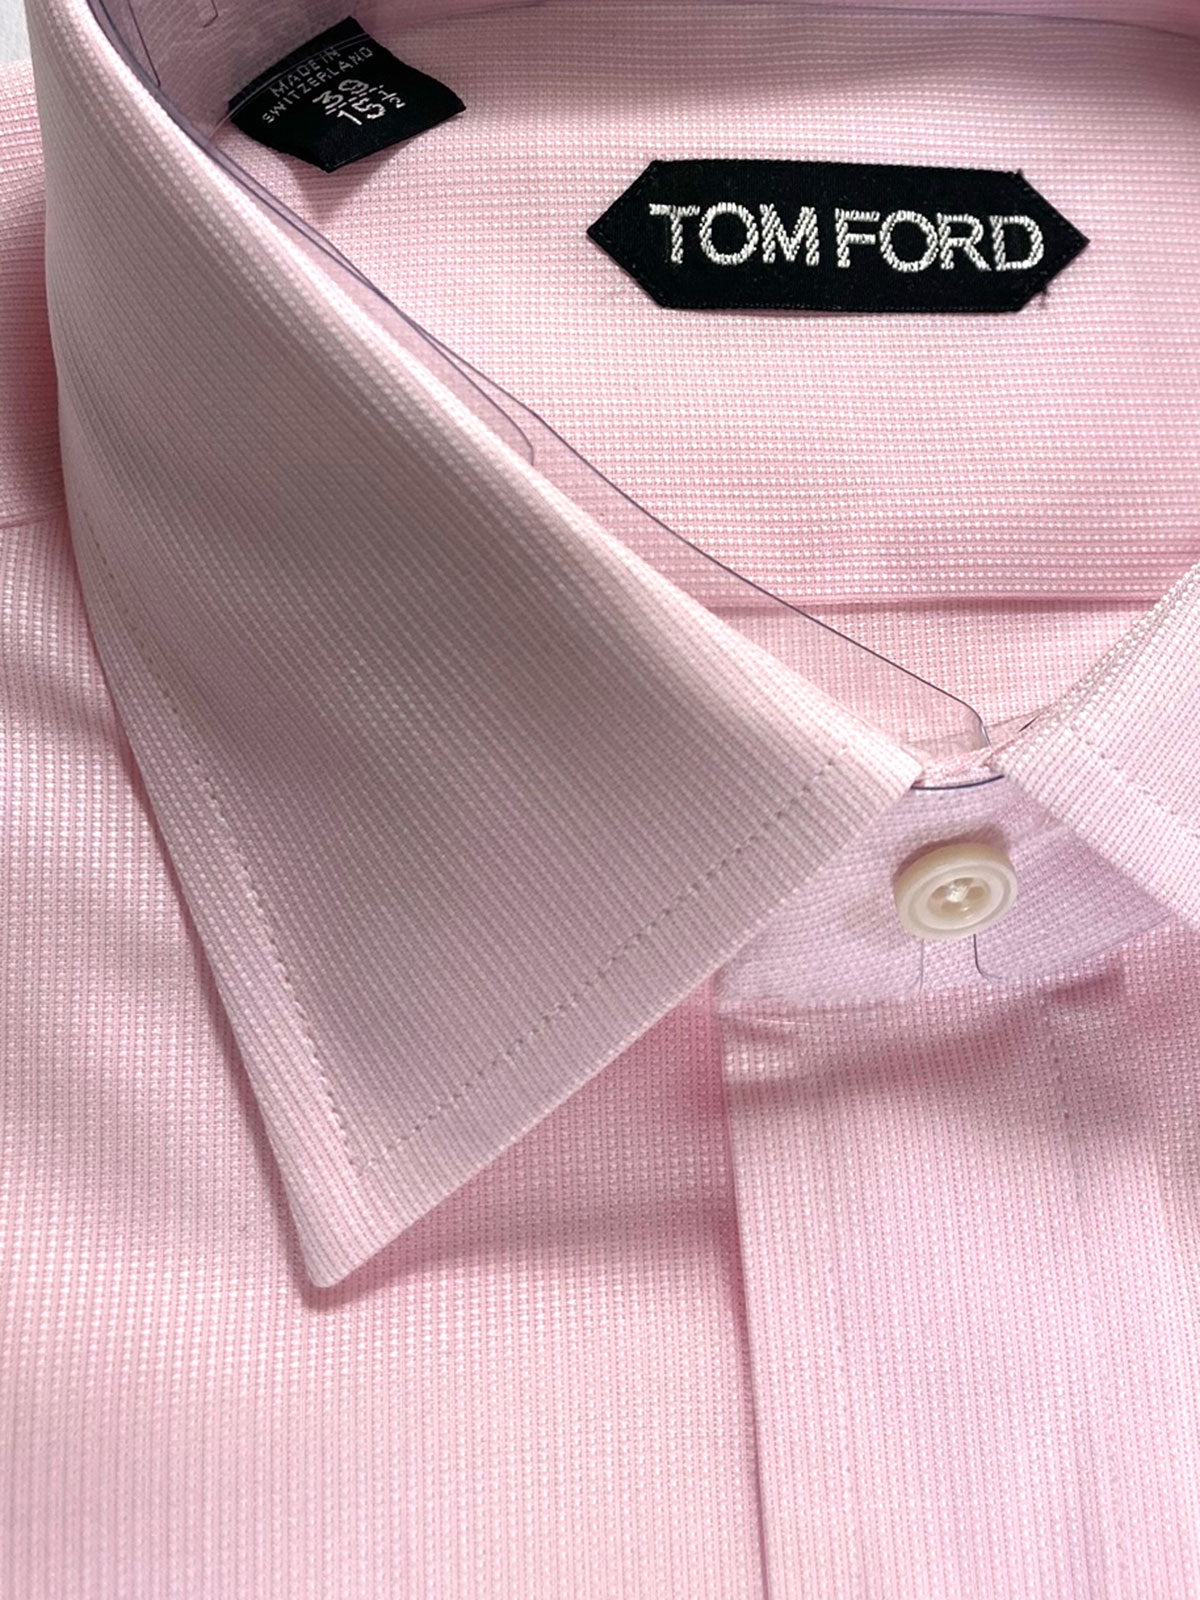 Tom Ford Dress Shirt Pink Pattern Modern Fit 39 - 15 1/2 - Tie Deals